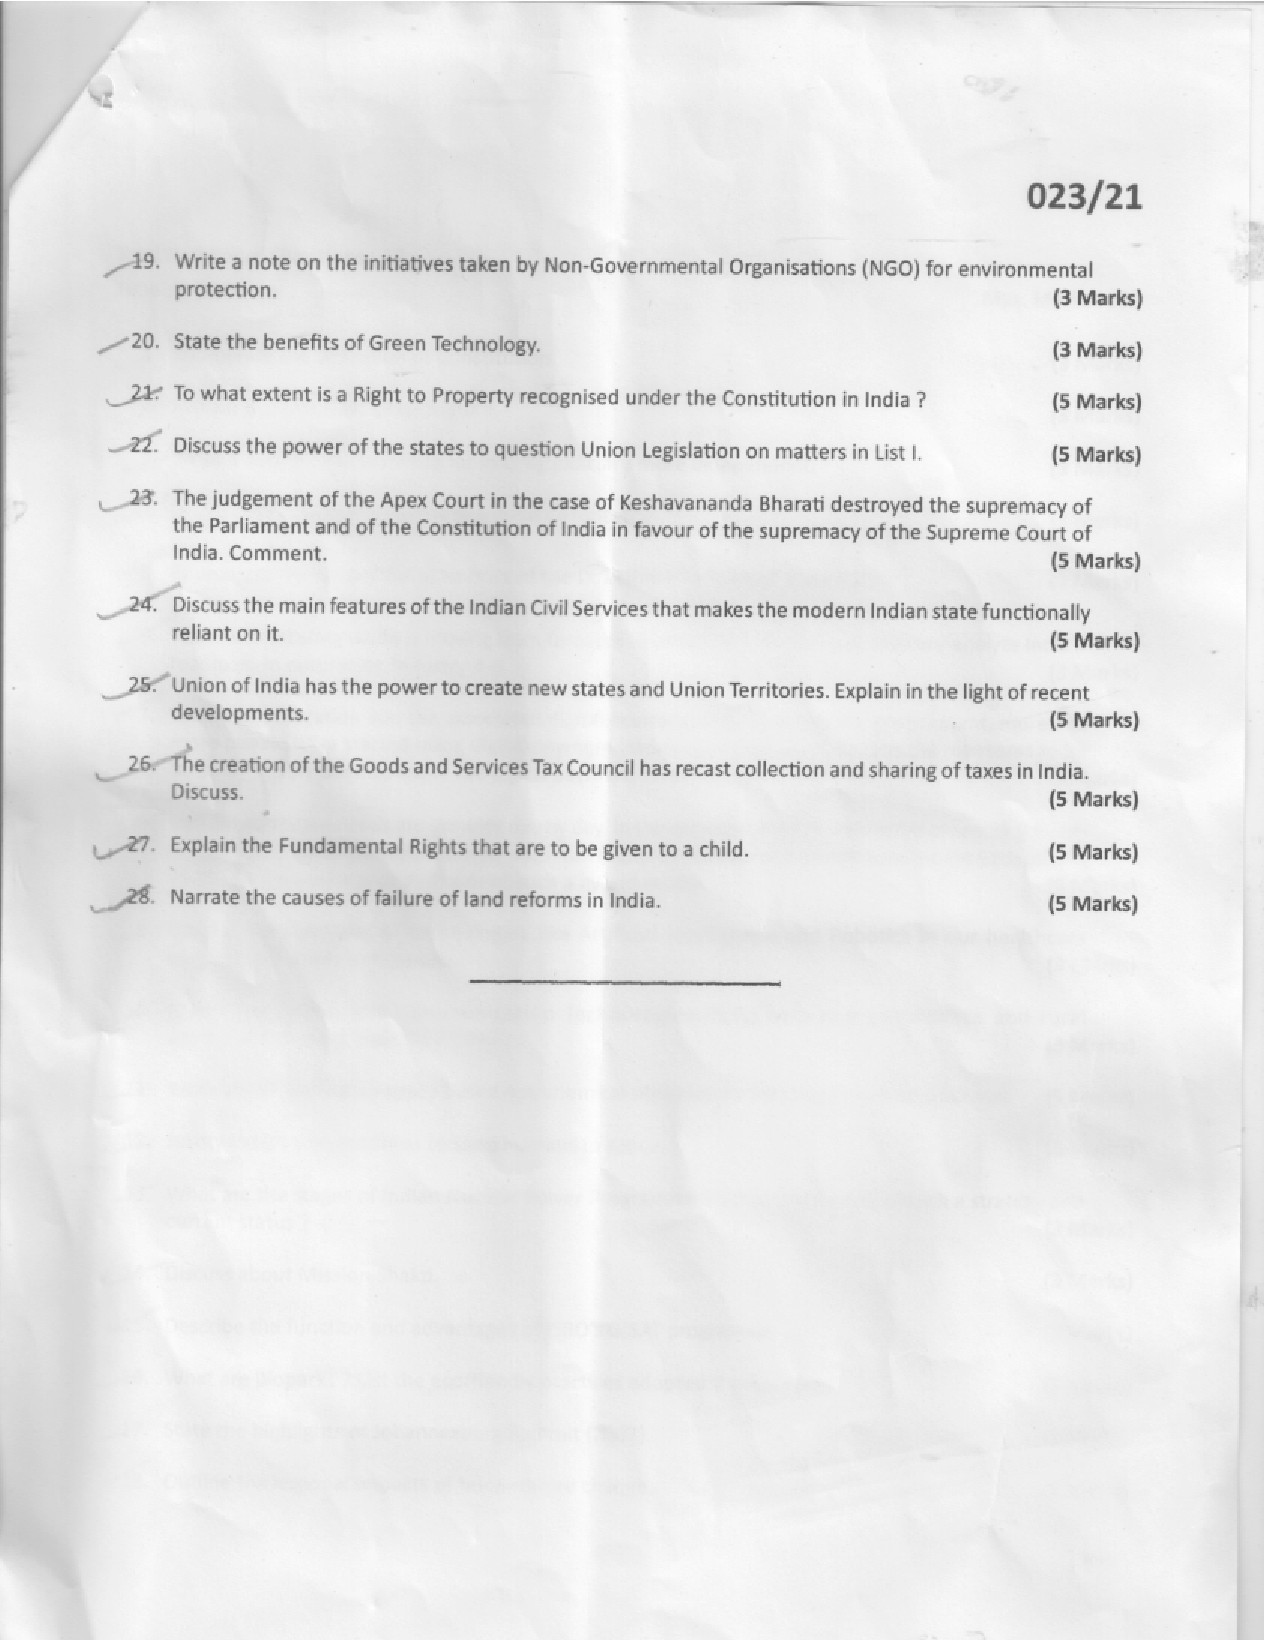 KAS Descriptive Question Paper Stream III Paper 2 2020 Code 02321 2